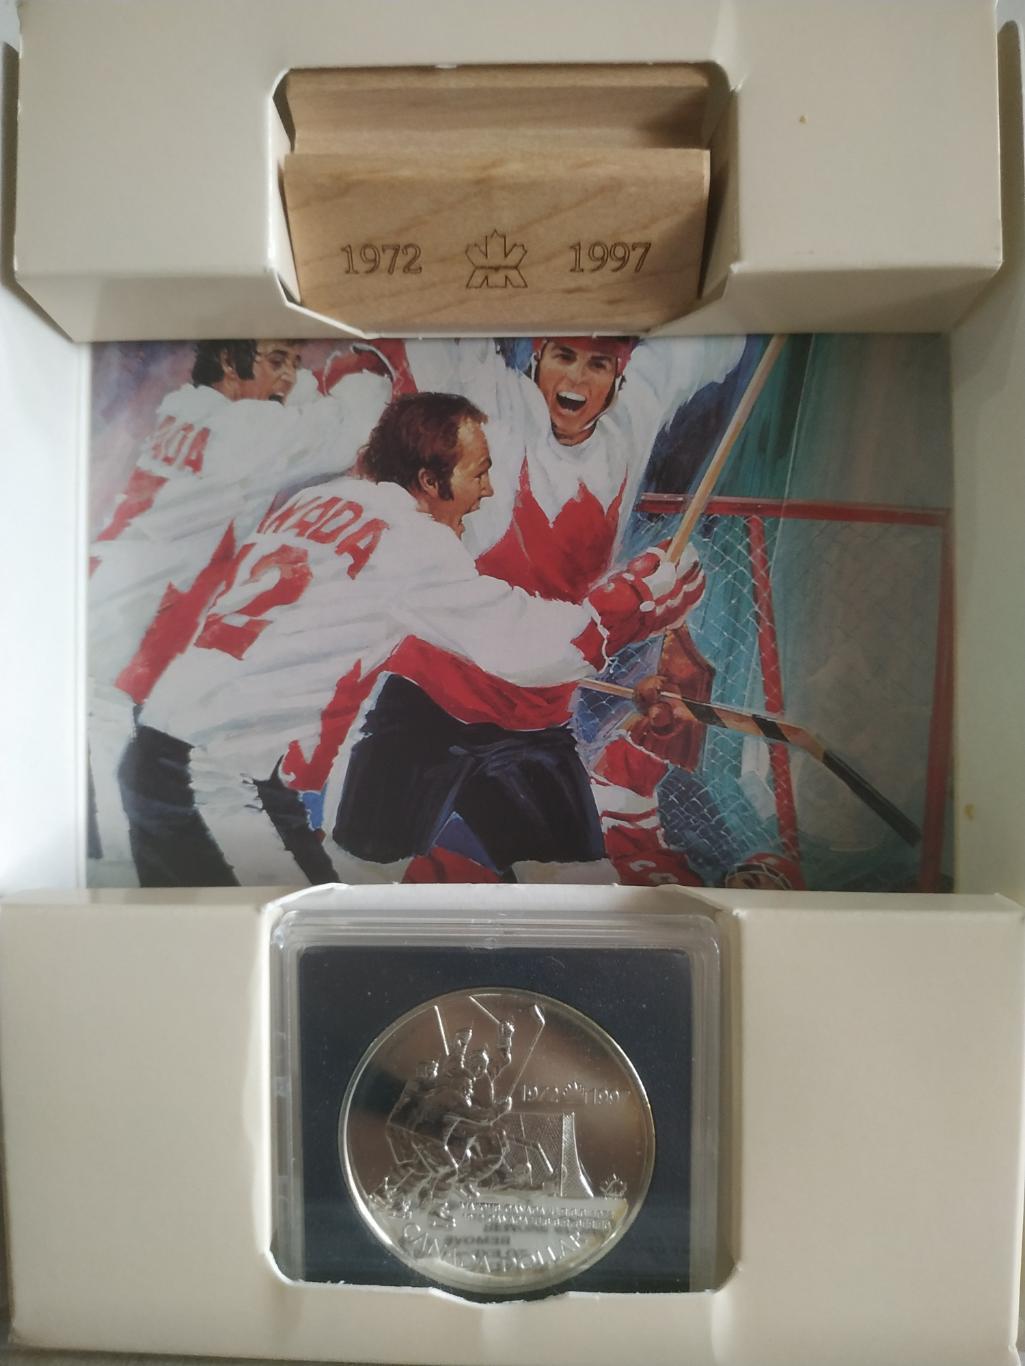 ХОККЕЙ МОНЕТА НХЛ 1972 - 1997 МАТЧ КАНАДА - СССР СУПЕРСЕРИЯ COIN CANADA USSR 1